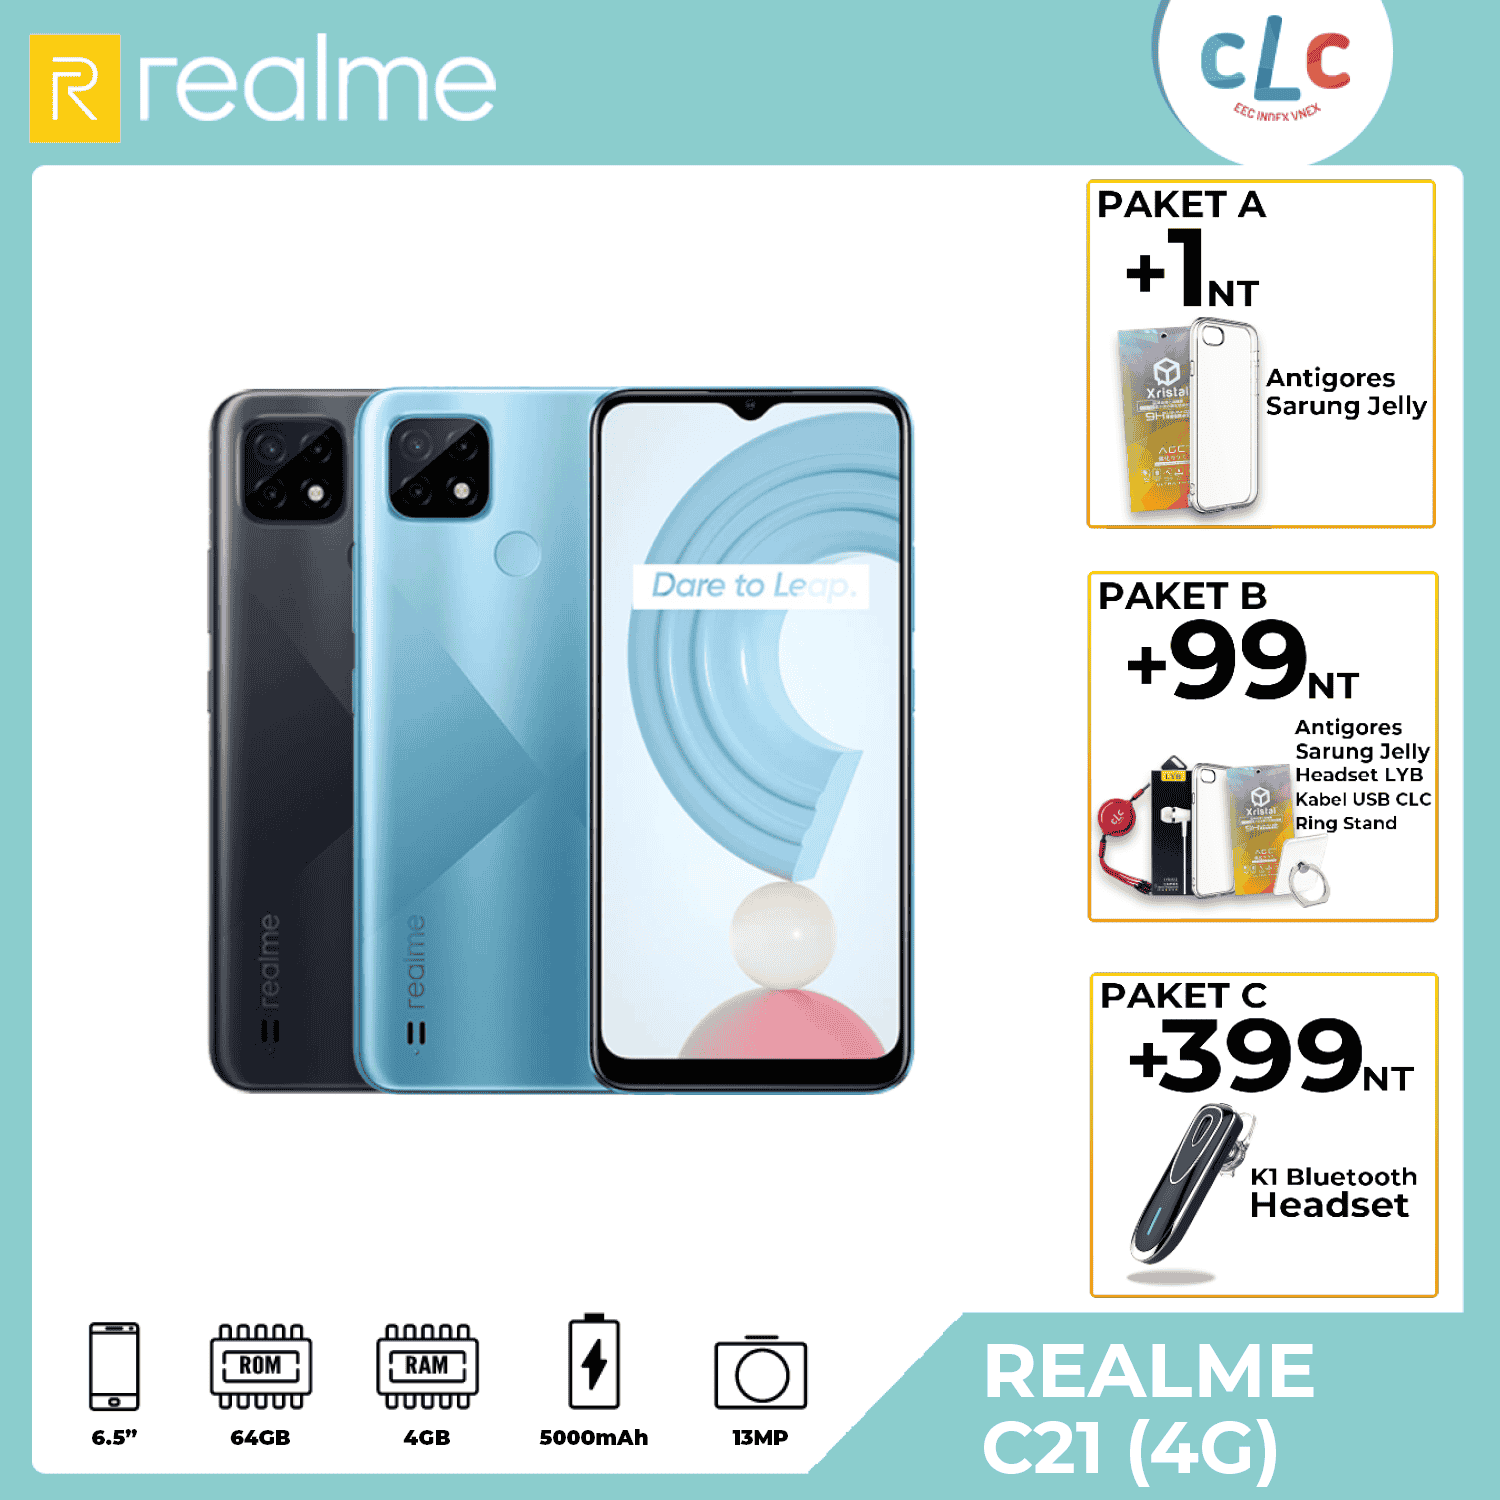 REALME C21 (4G)